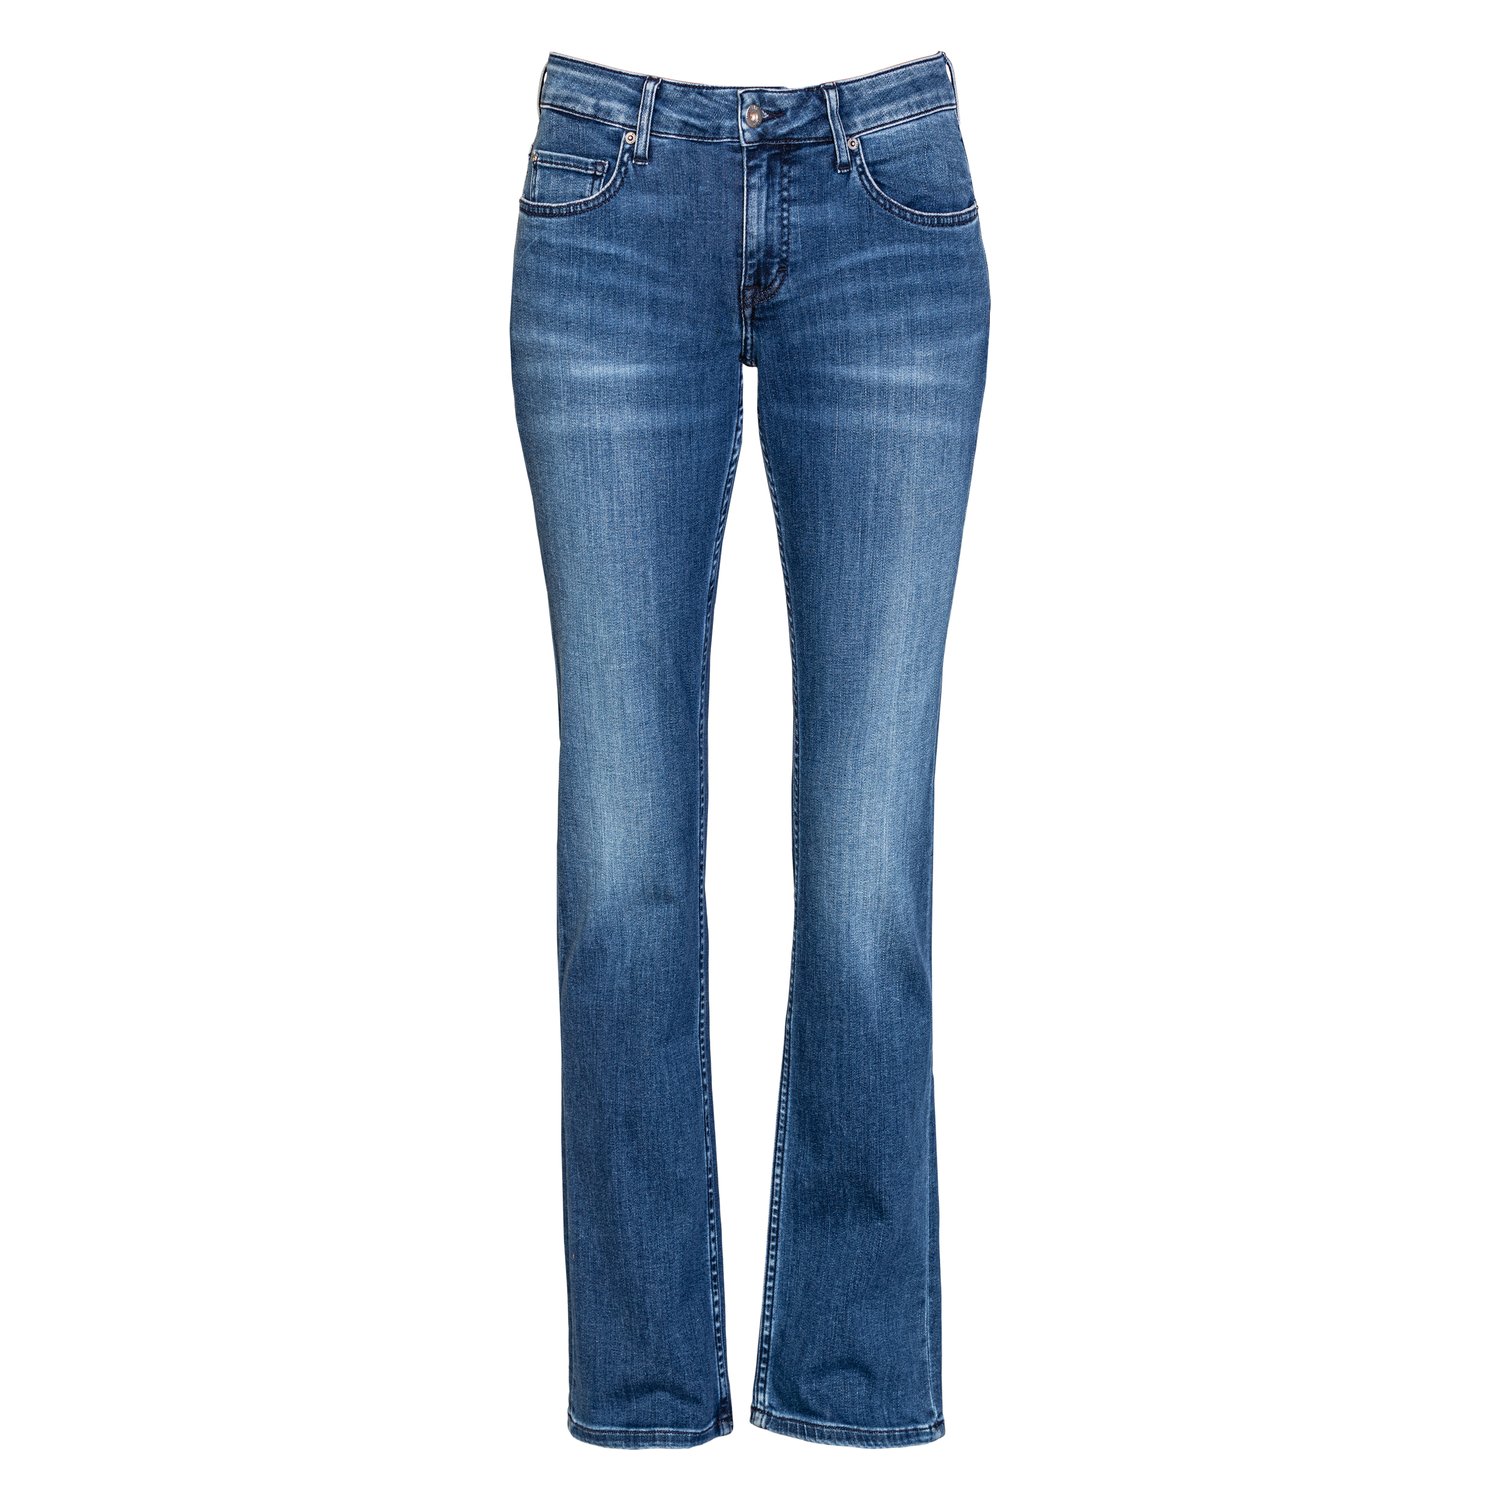 MUSTANG Jeans Sissy Straight denim blue | 31-30